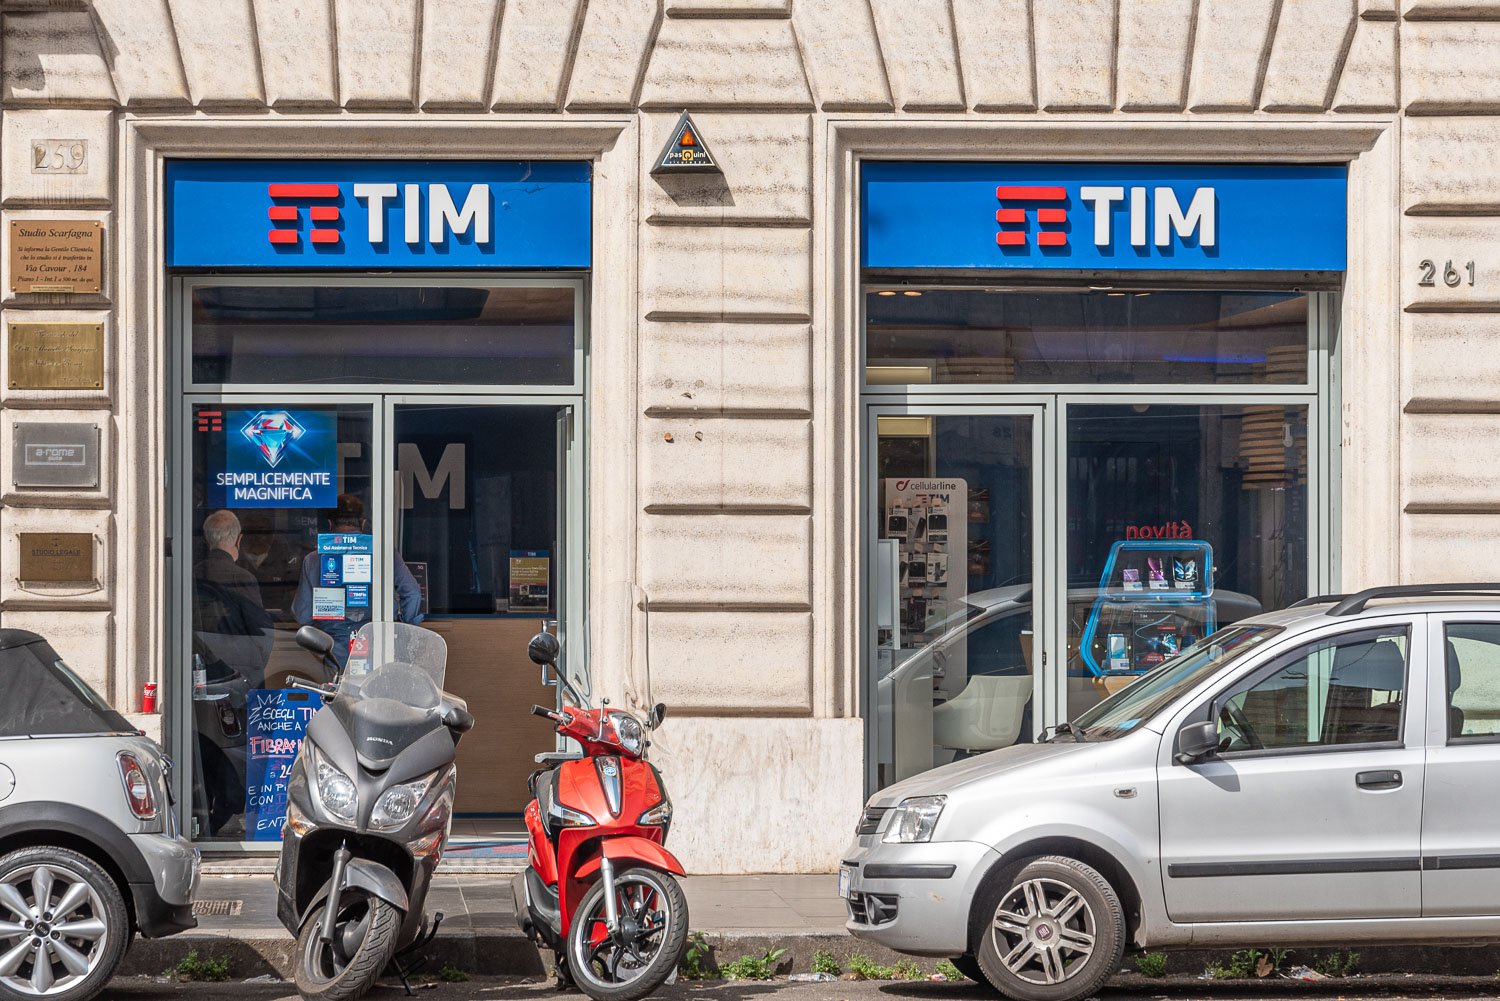 Rome SIM card - TIM